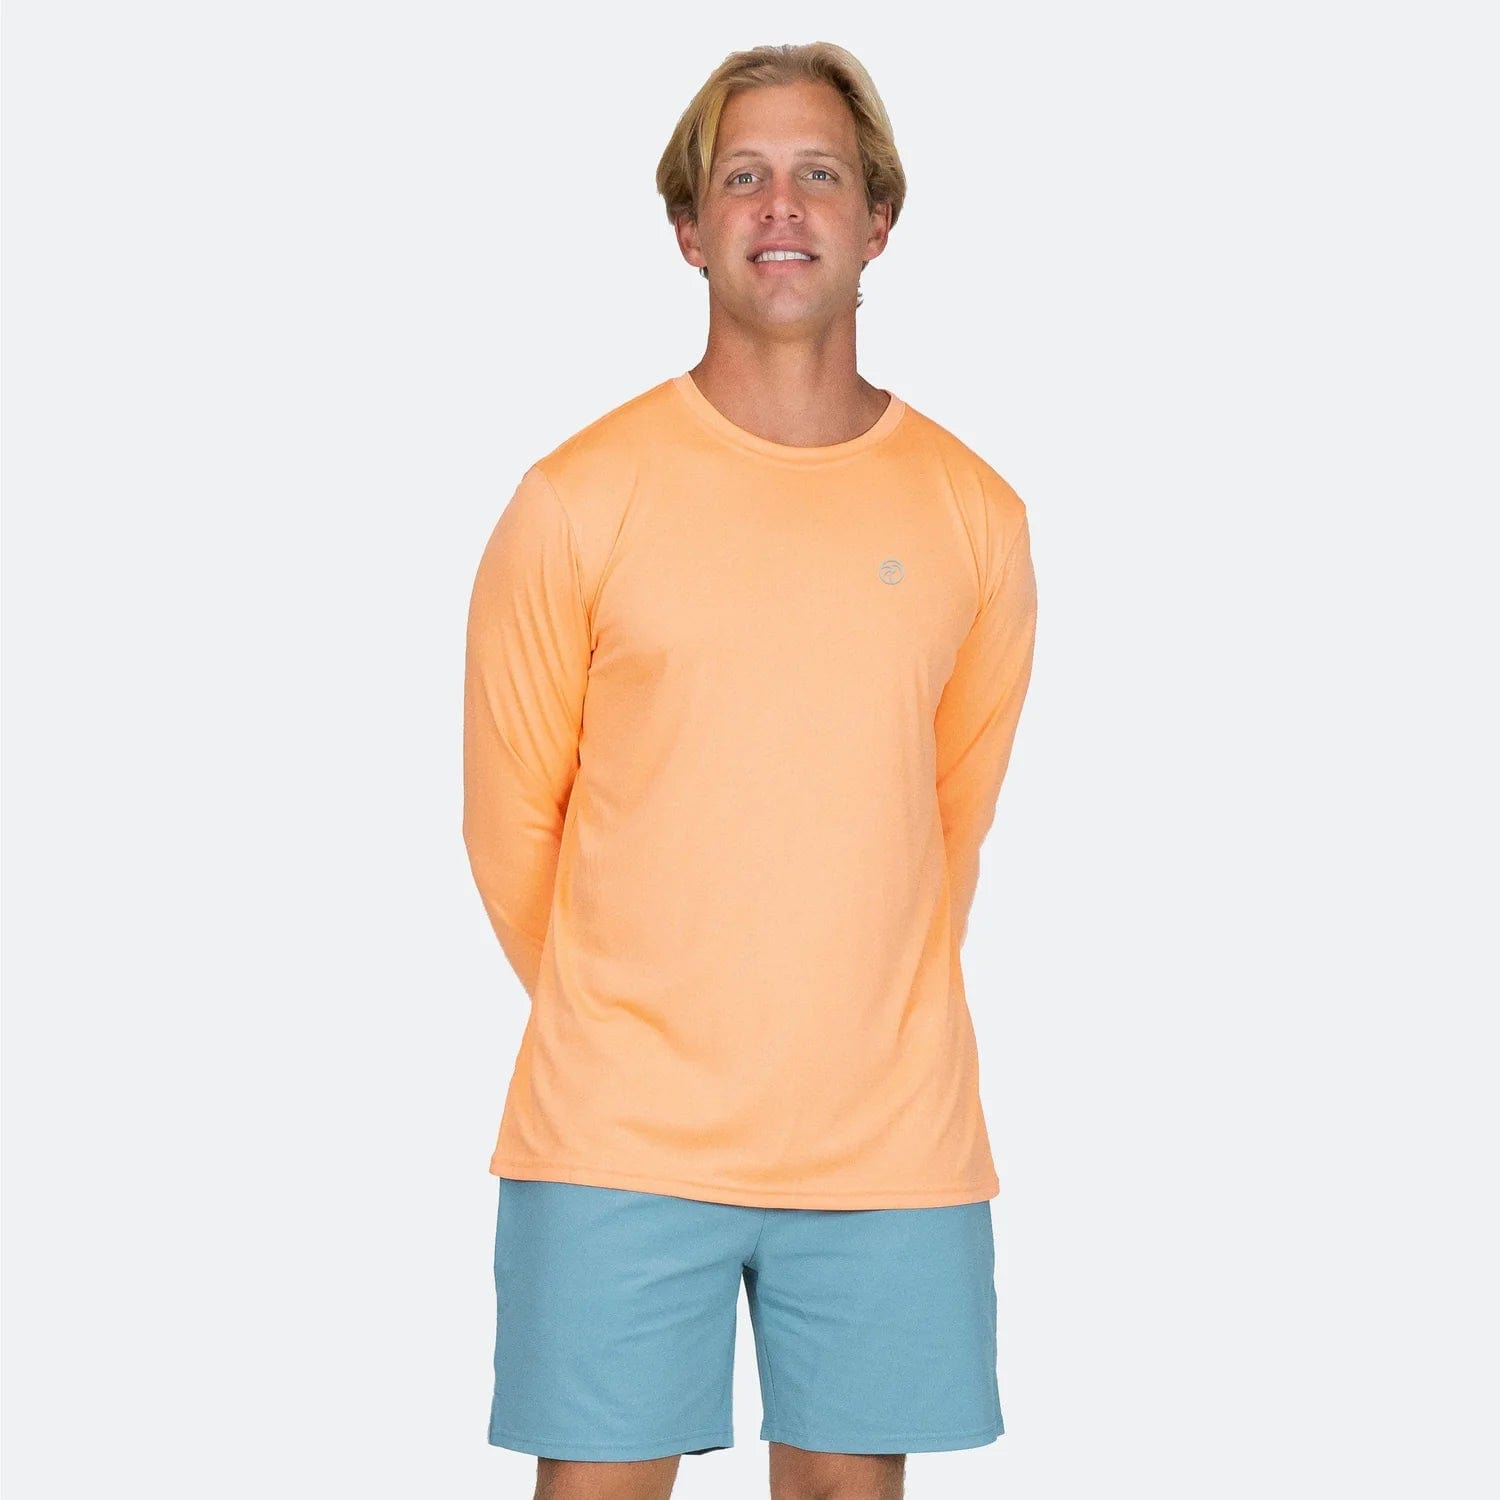 Vapor Apparel Men's UPF 50+ Sun Protection Solar Long Sleeve Shirt, Safety Orange, 2x Large